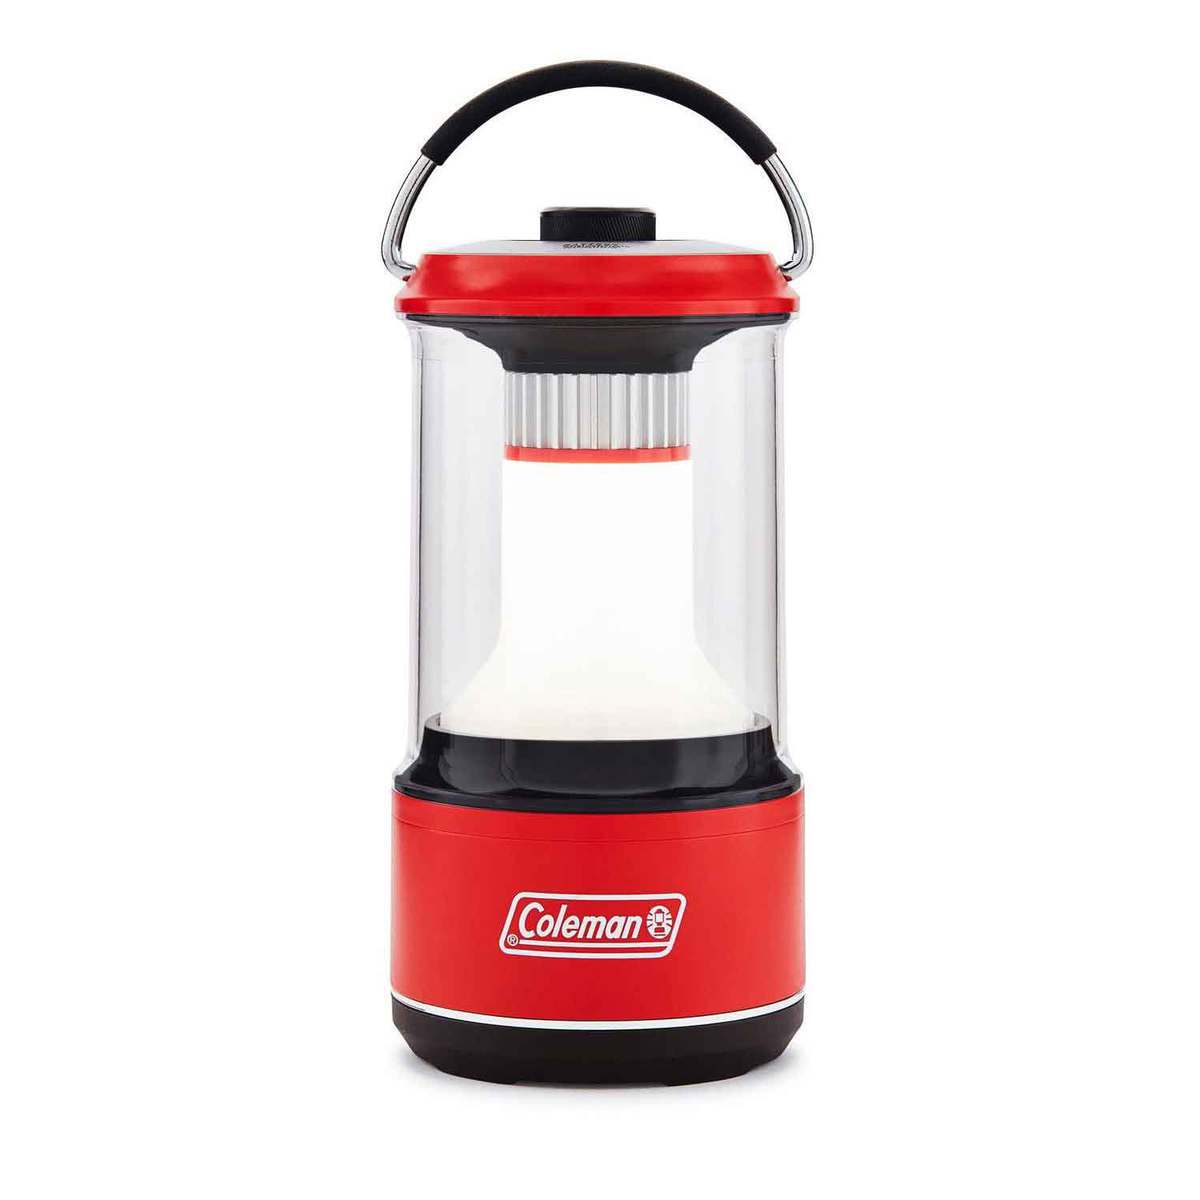 https://www.sportsmans.com/medias/coleman-600-lumen-led-lantern-with-batteryguard-red-1527483-1.jpg?context=bWFzdGVyfGltYWdlc3w0MDQzN3xpbWFnZS9qcGVnfGltYWdlcy9oZTEvaGFhLzk3MzMyMjUzODE5MTguanBnfGU3ZjBjYmVlZjRlMWE4M2I3NTIzNjgxNzgwZDhlZTdjYWZiYTA2OTlkYTg0MjMyMjBjNmE5MGM1ZjY0Y2U5OGU